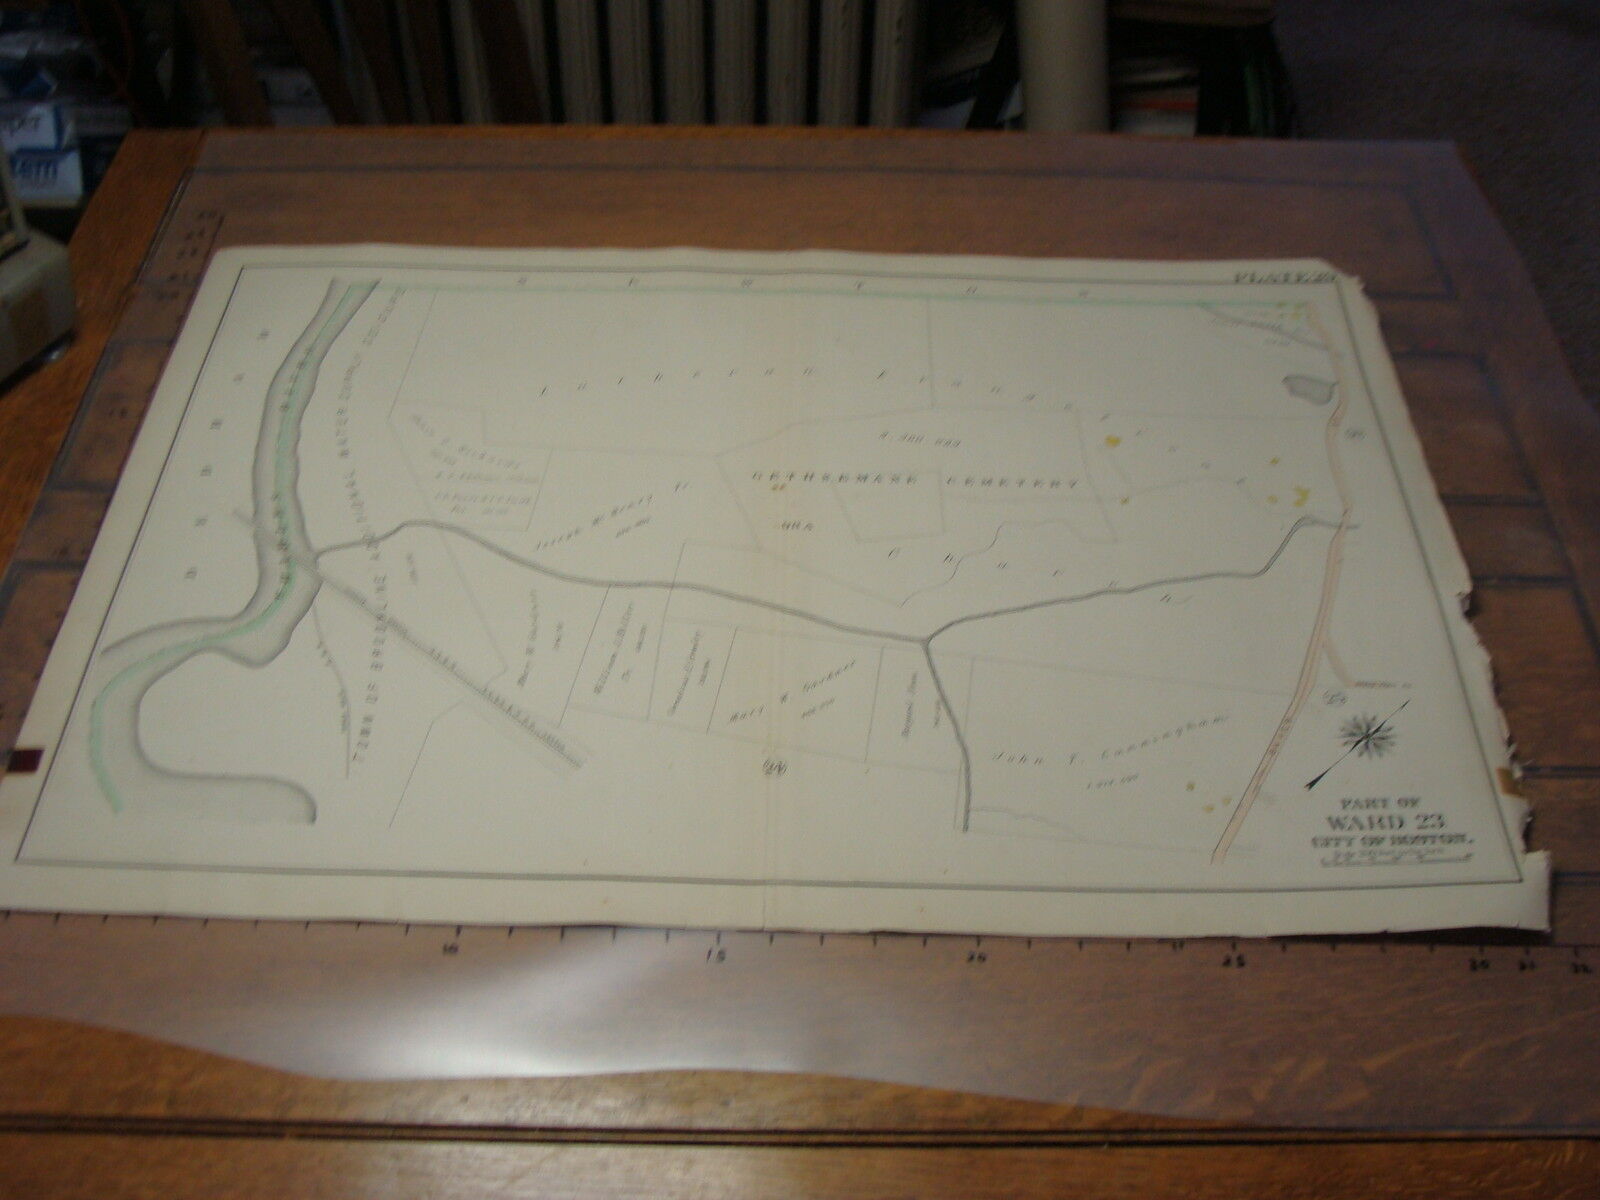 1905 CITY OF BOSTON MAP Ward 23: Plate 29 w/ Charles River, Gethsemane Cemet